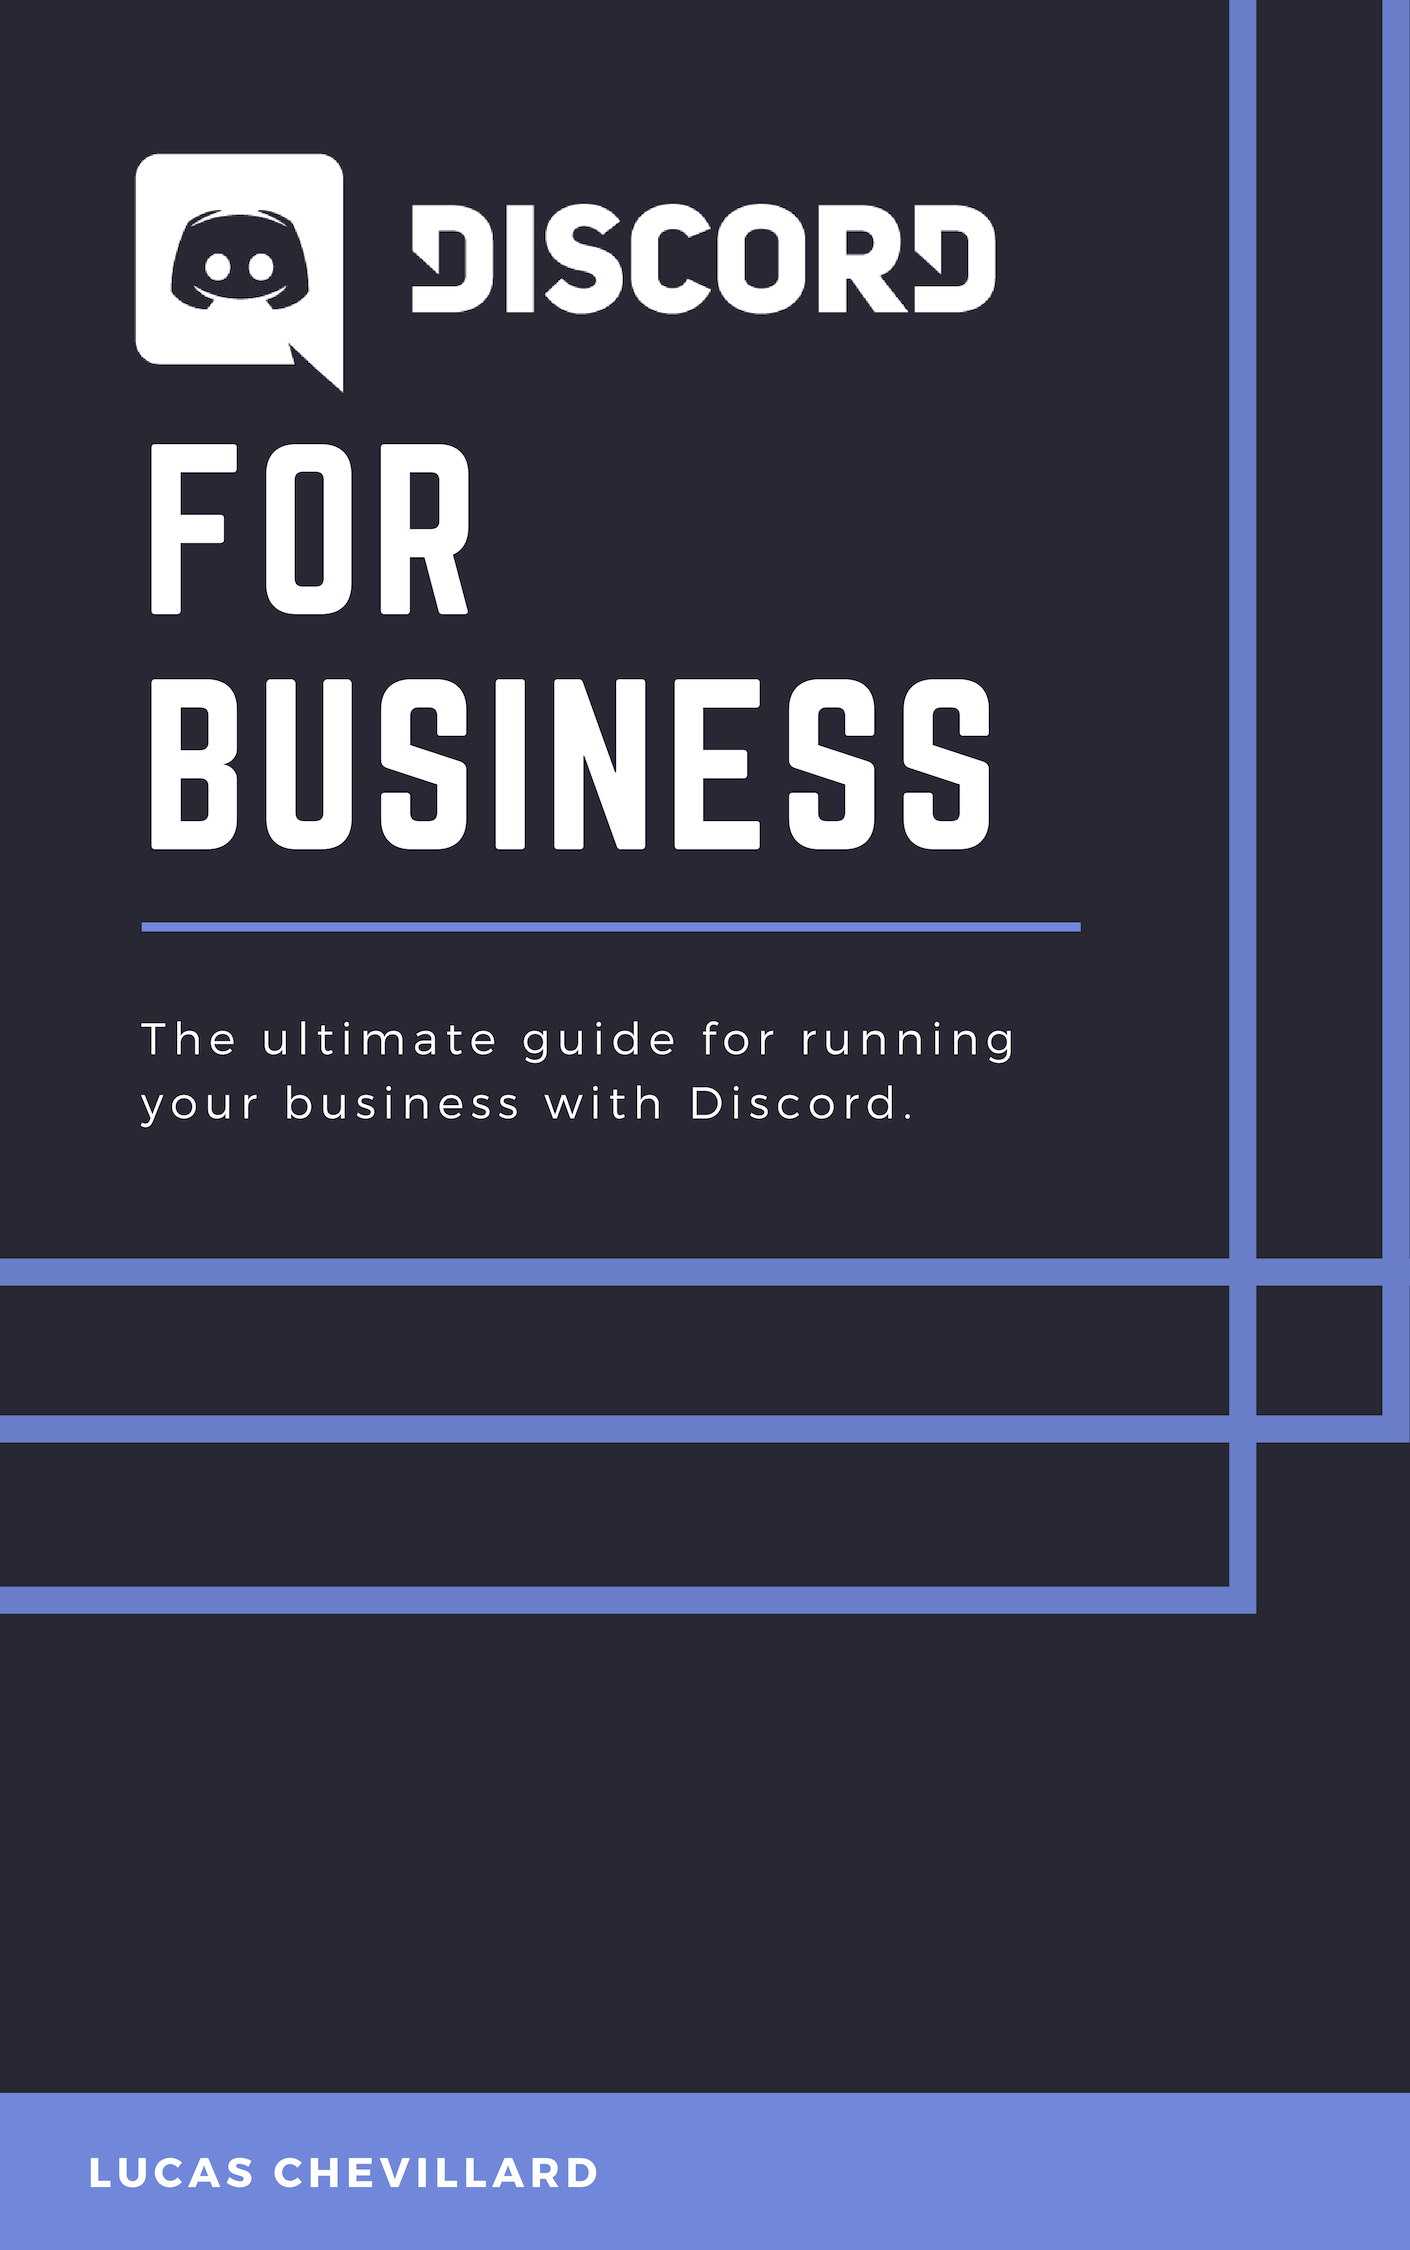 Discord for business guide ebook by Lucas Chevillard